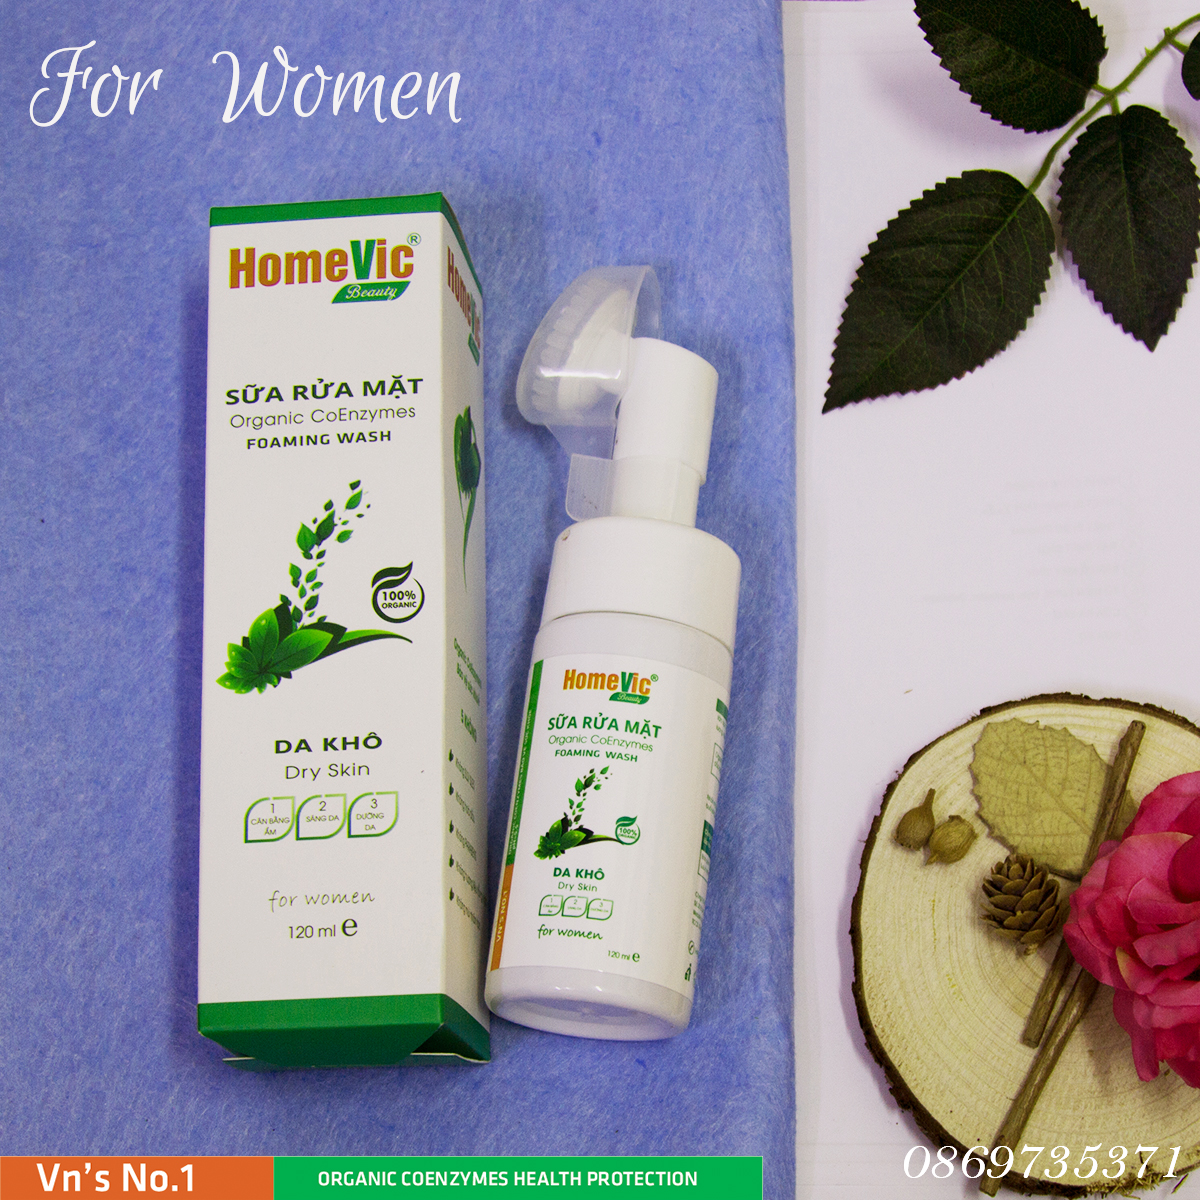 Sửa rửa mặt cho da khô for Women